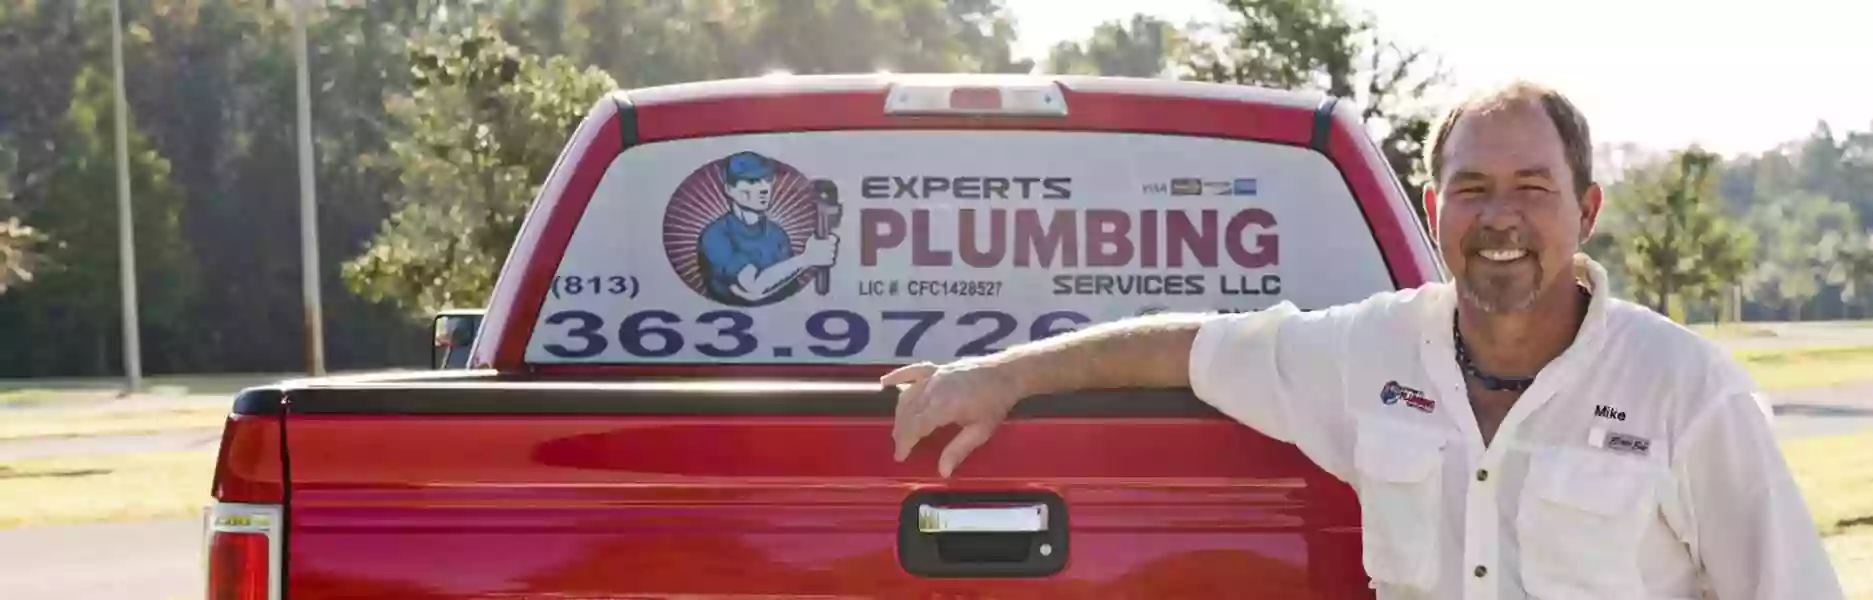 Experts Plumbing Services, LLC